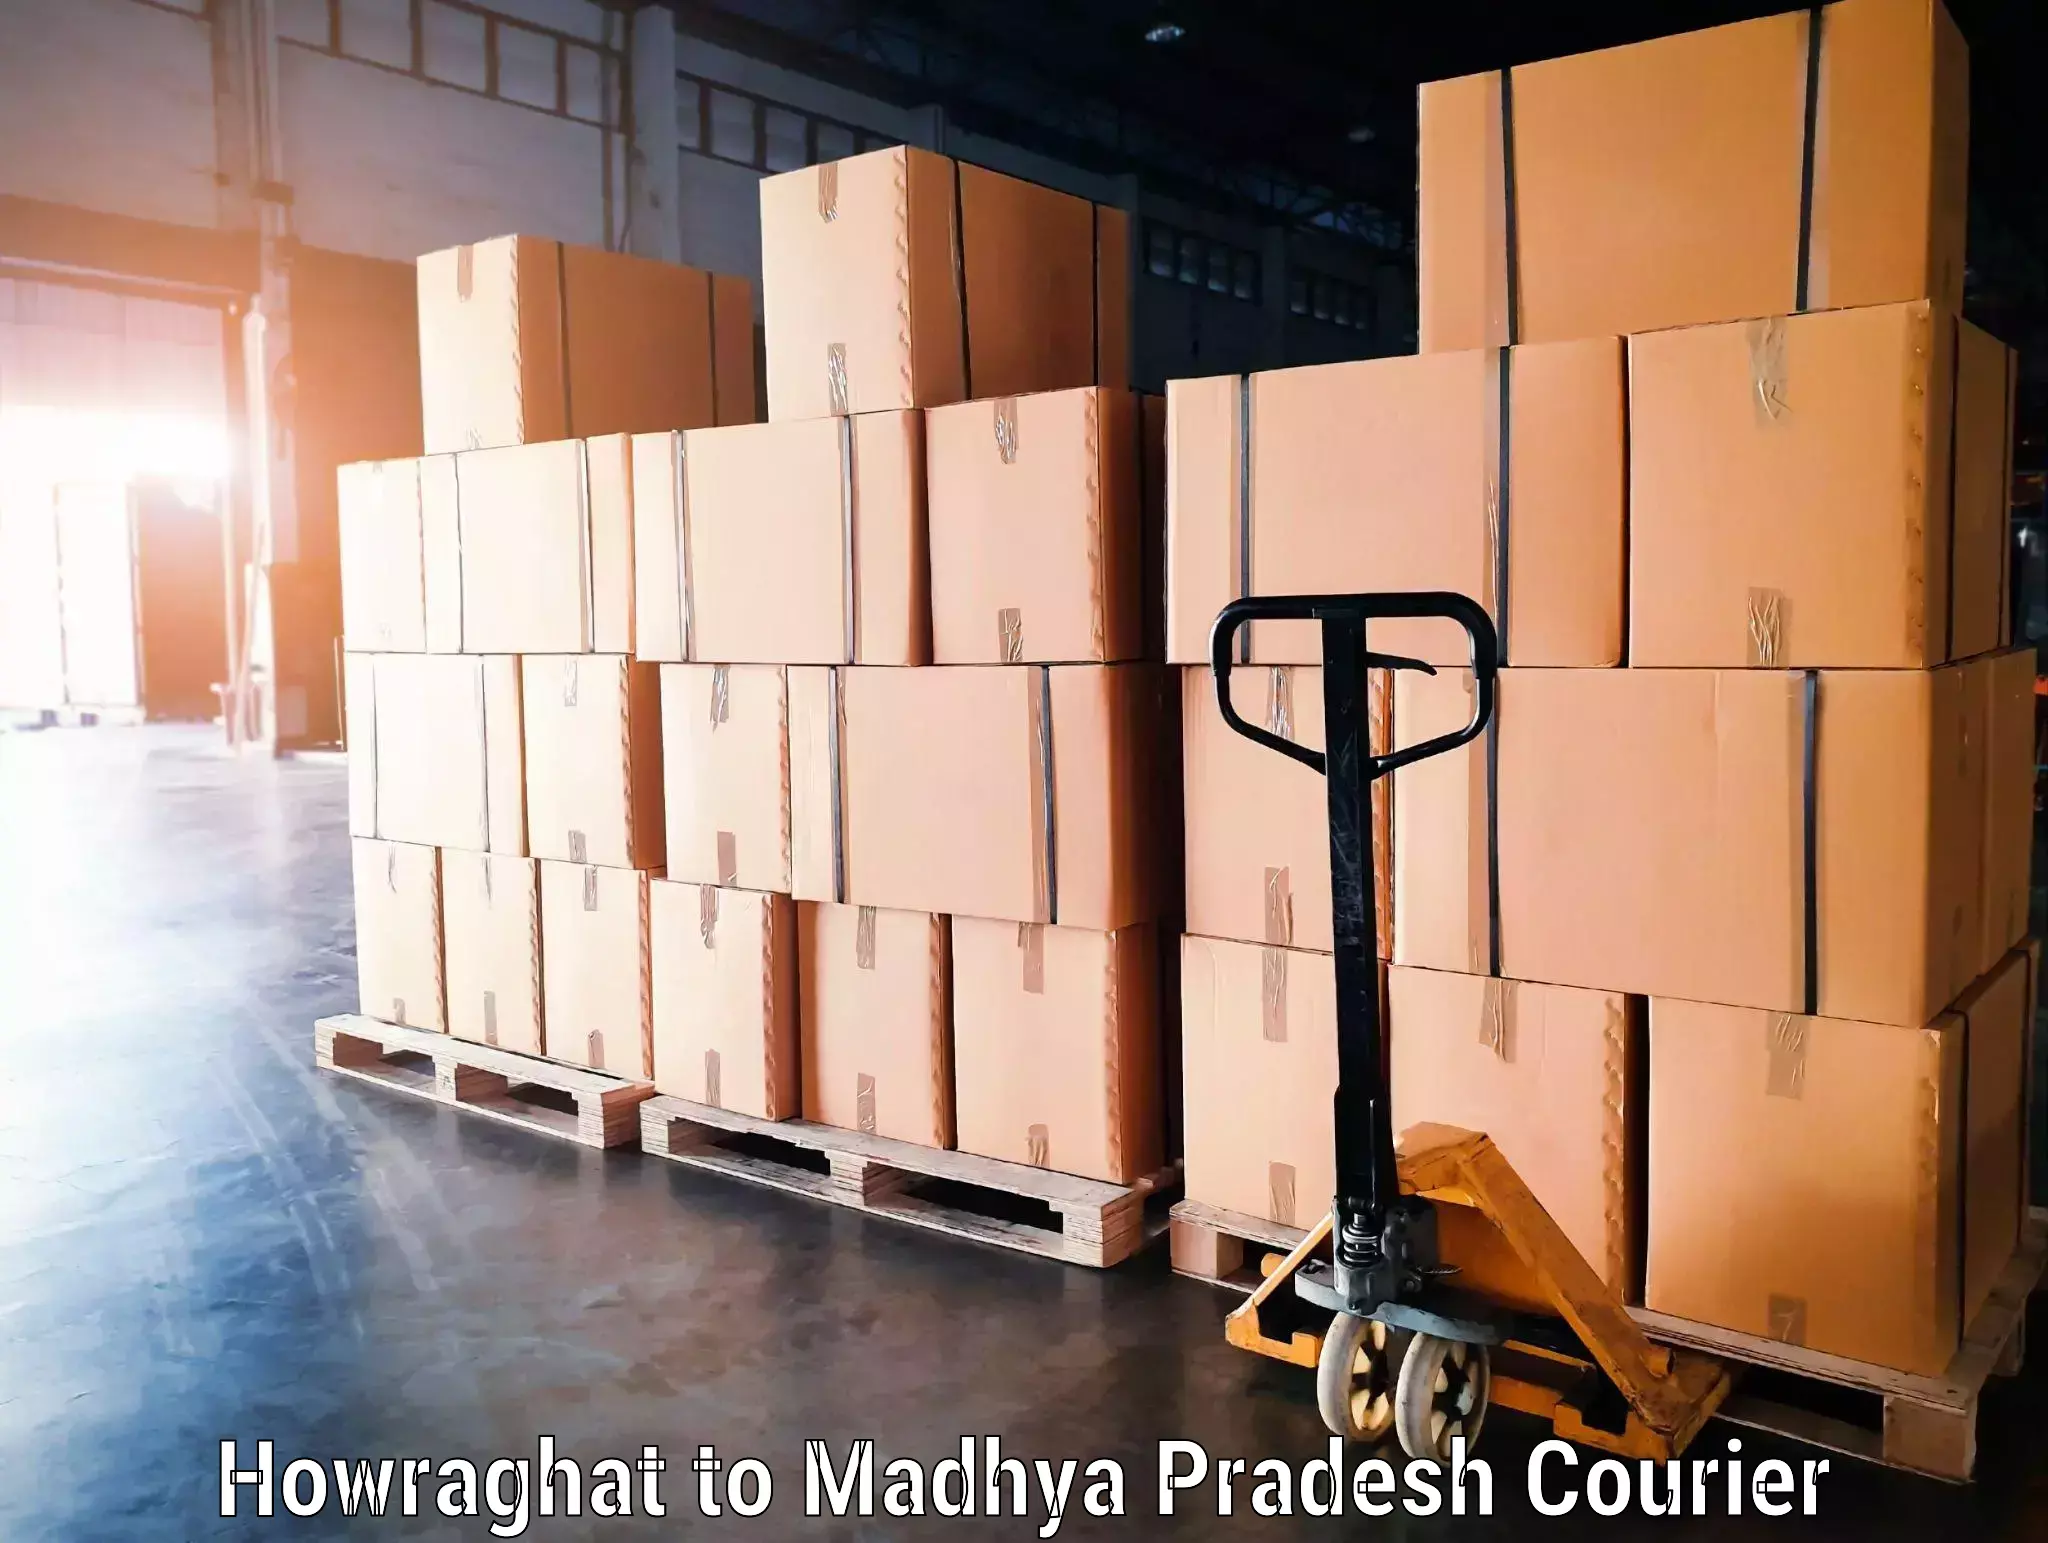 Emergency baggage service Howraghat to Madhya Pradesh